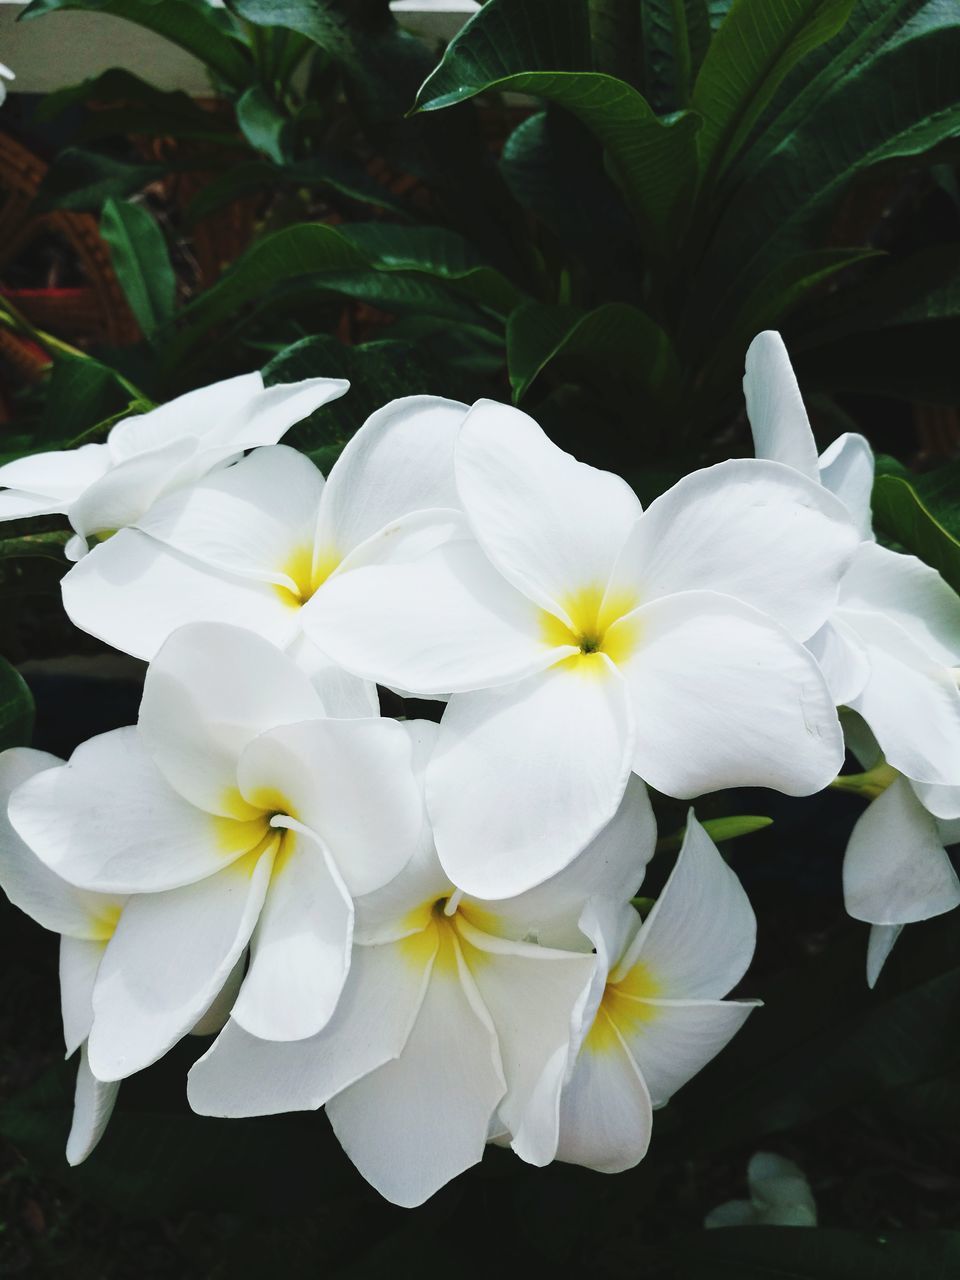 CLOSE-UP OF WHITE FRANGIPANI FLOWERS